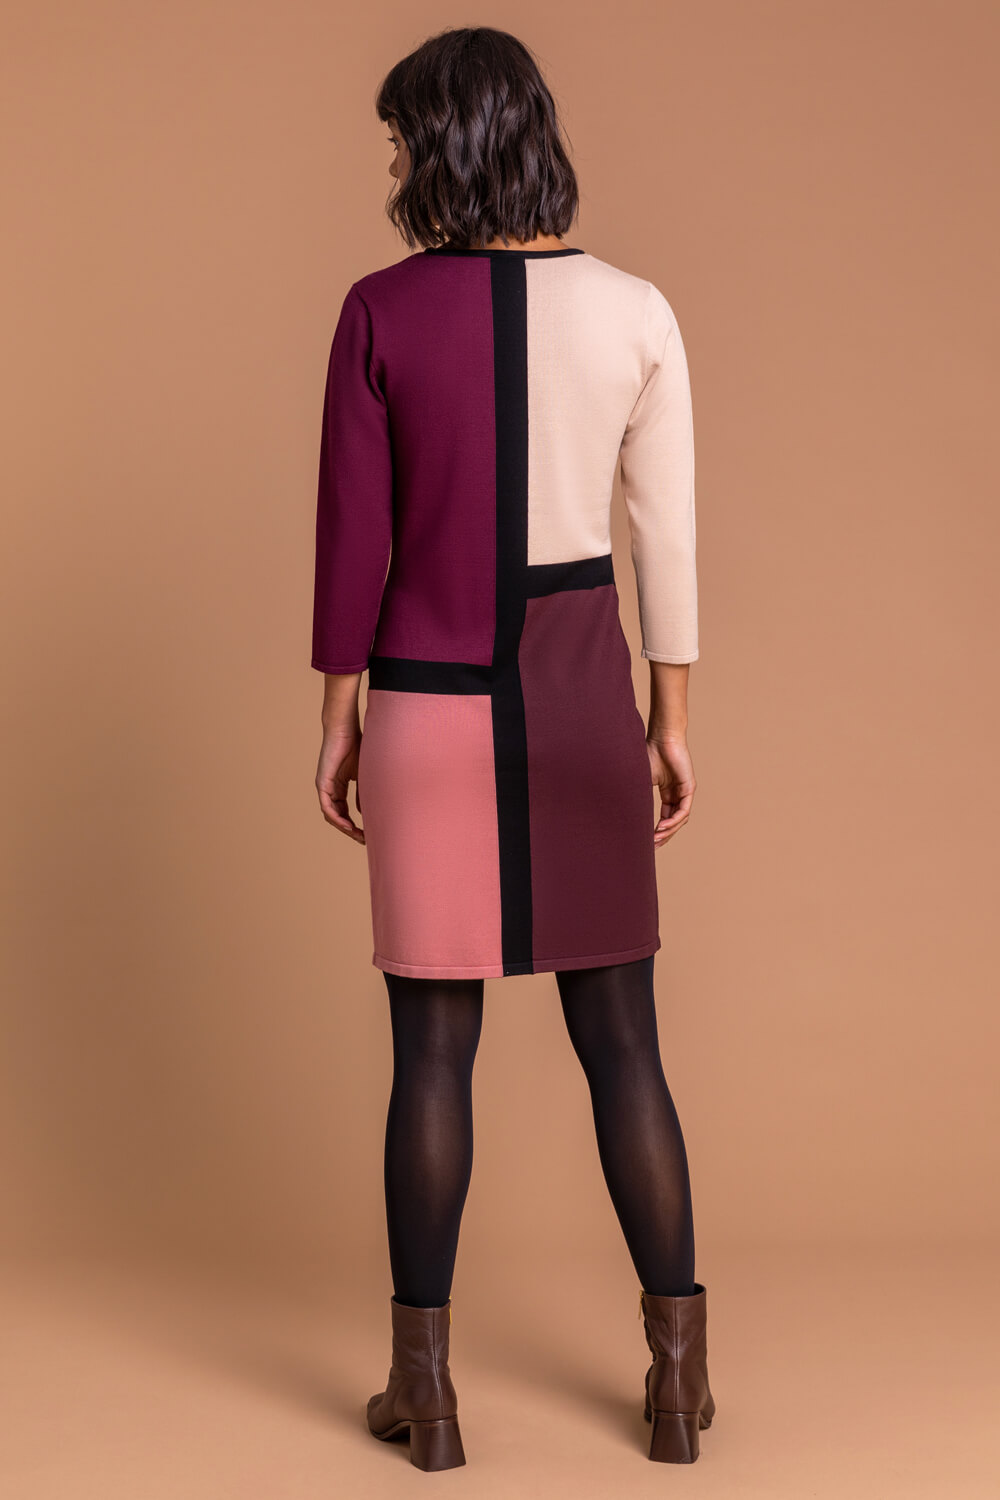 Rose Longline Colourblock Print Jumper Dress, Image 2 of 5